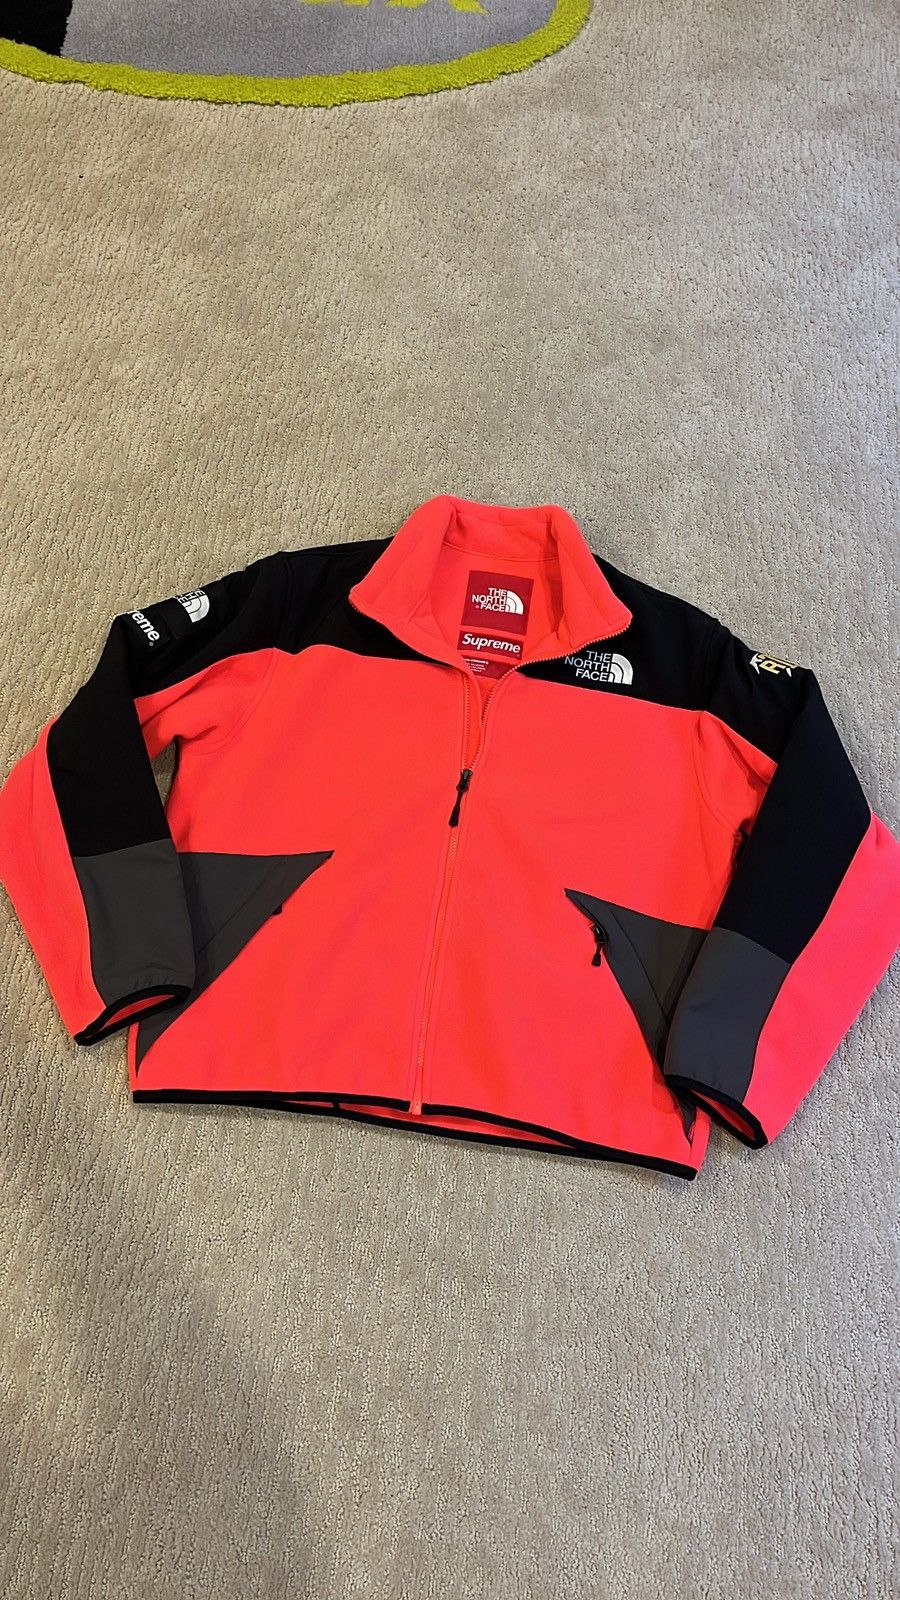 Supreme Supreme TNF Fleece RTG jacket | Grailed